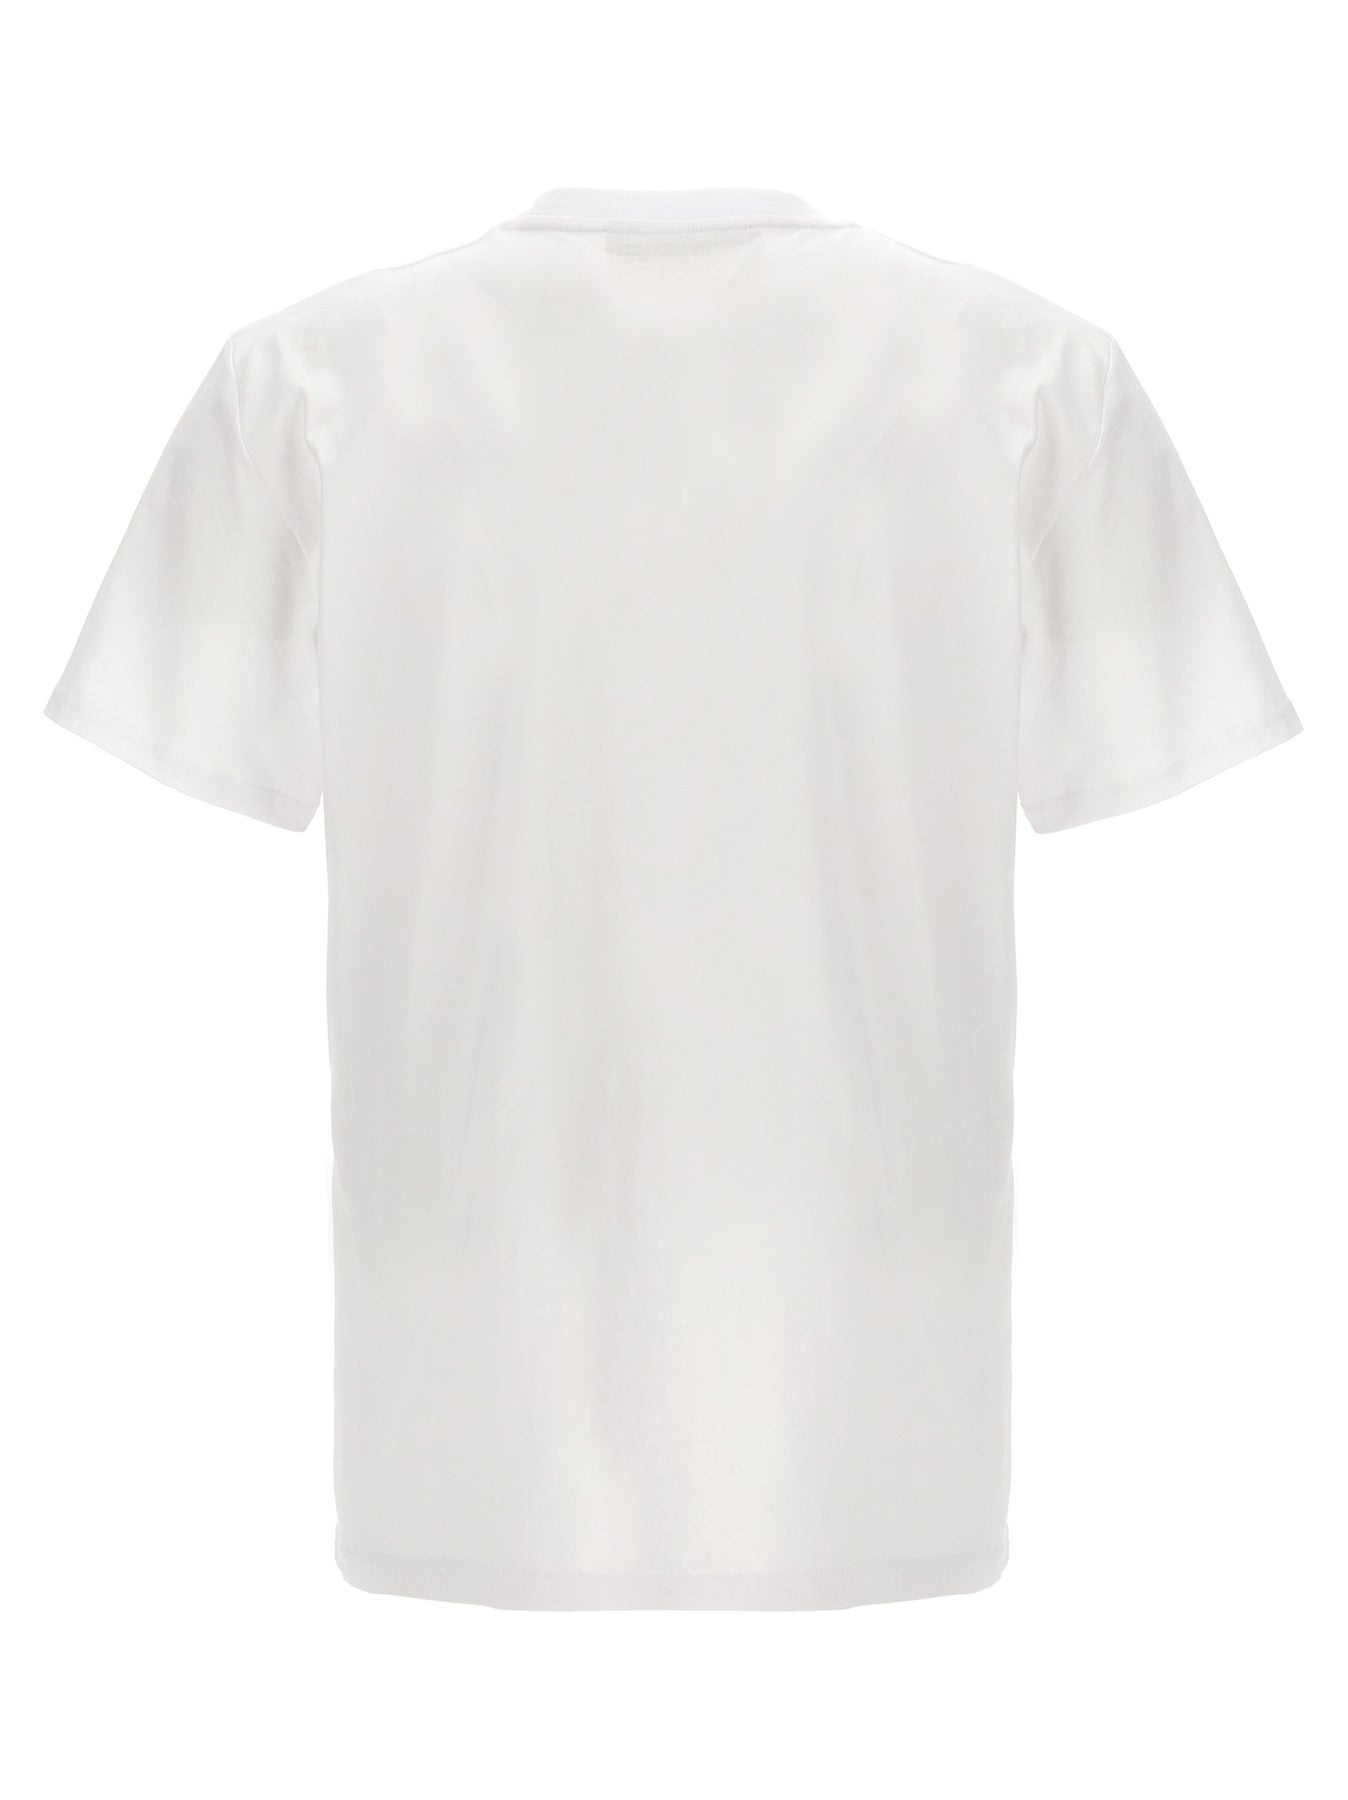 Logo Embroidery T-Shirt White/Black - 2